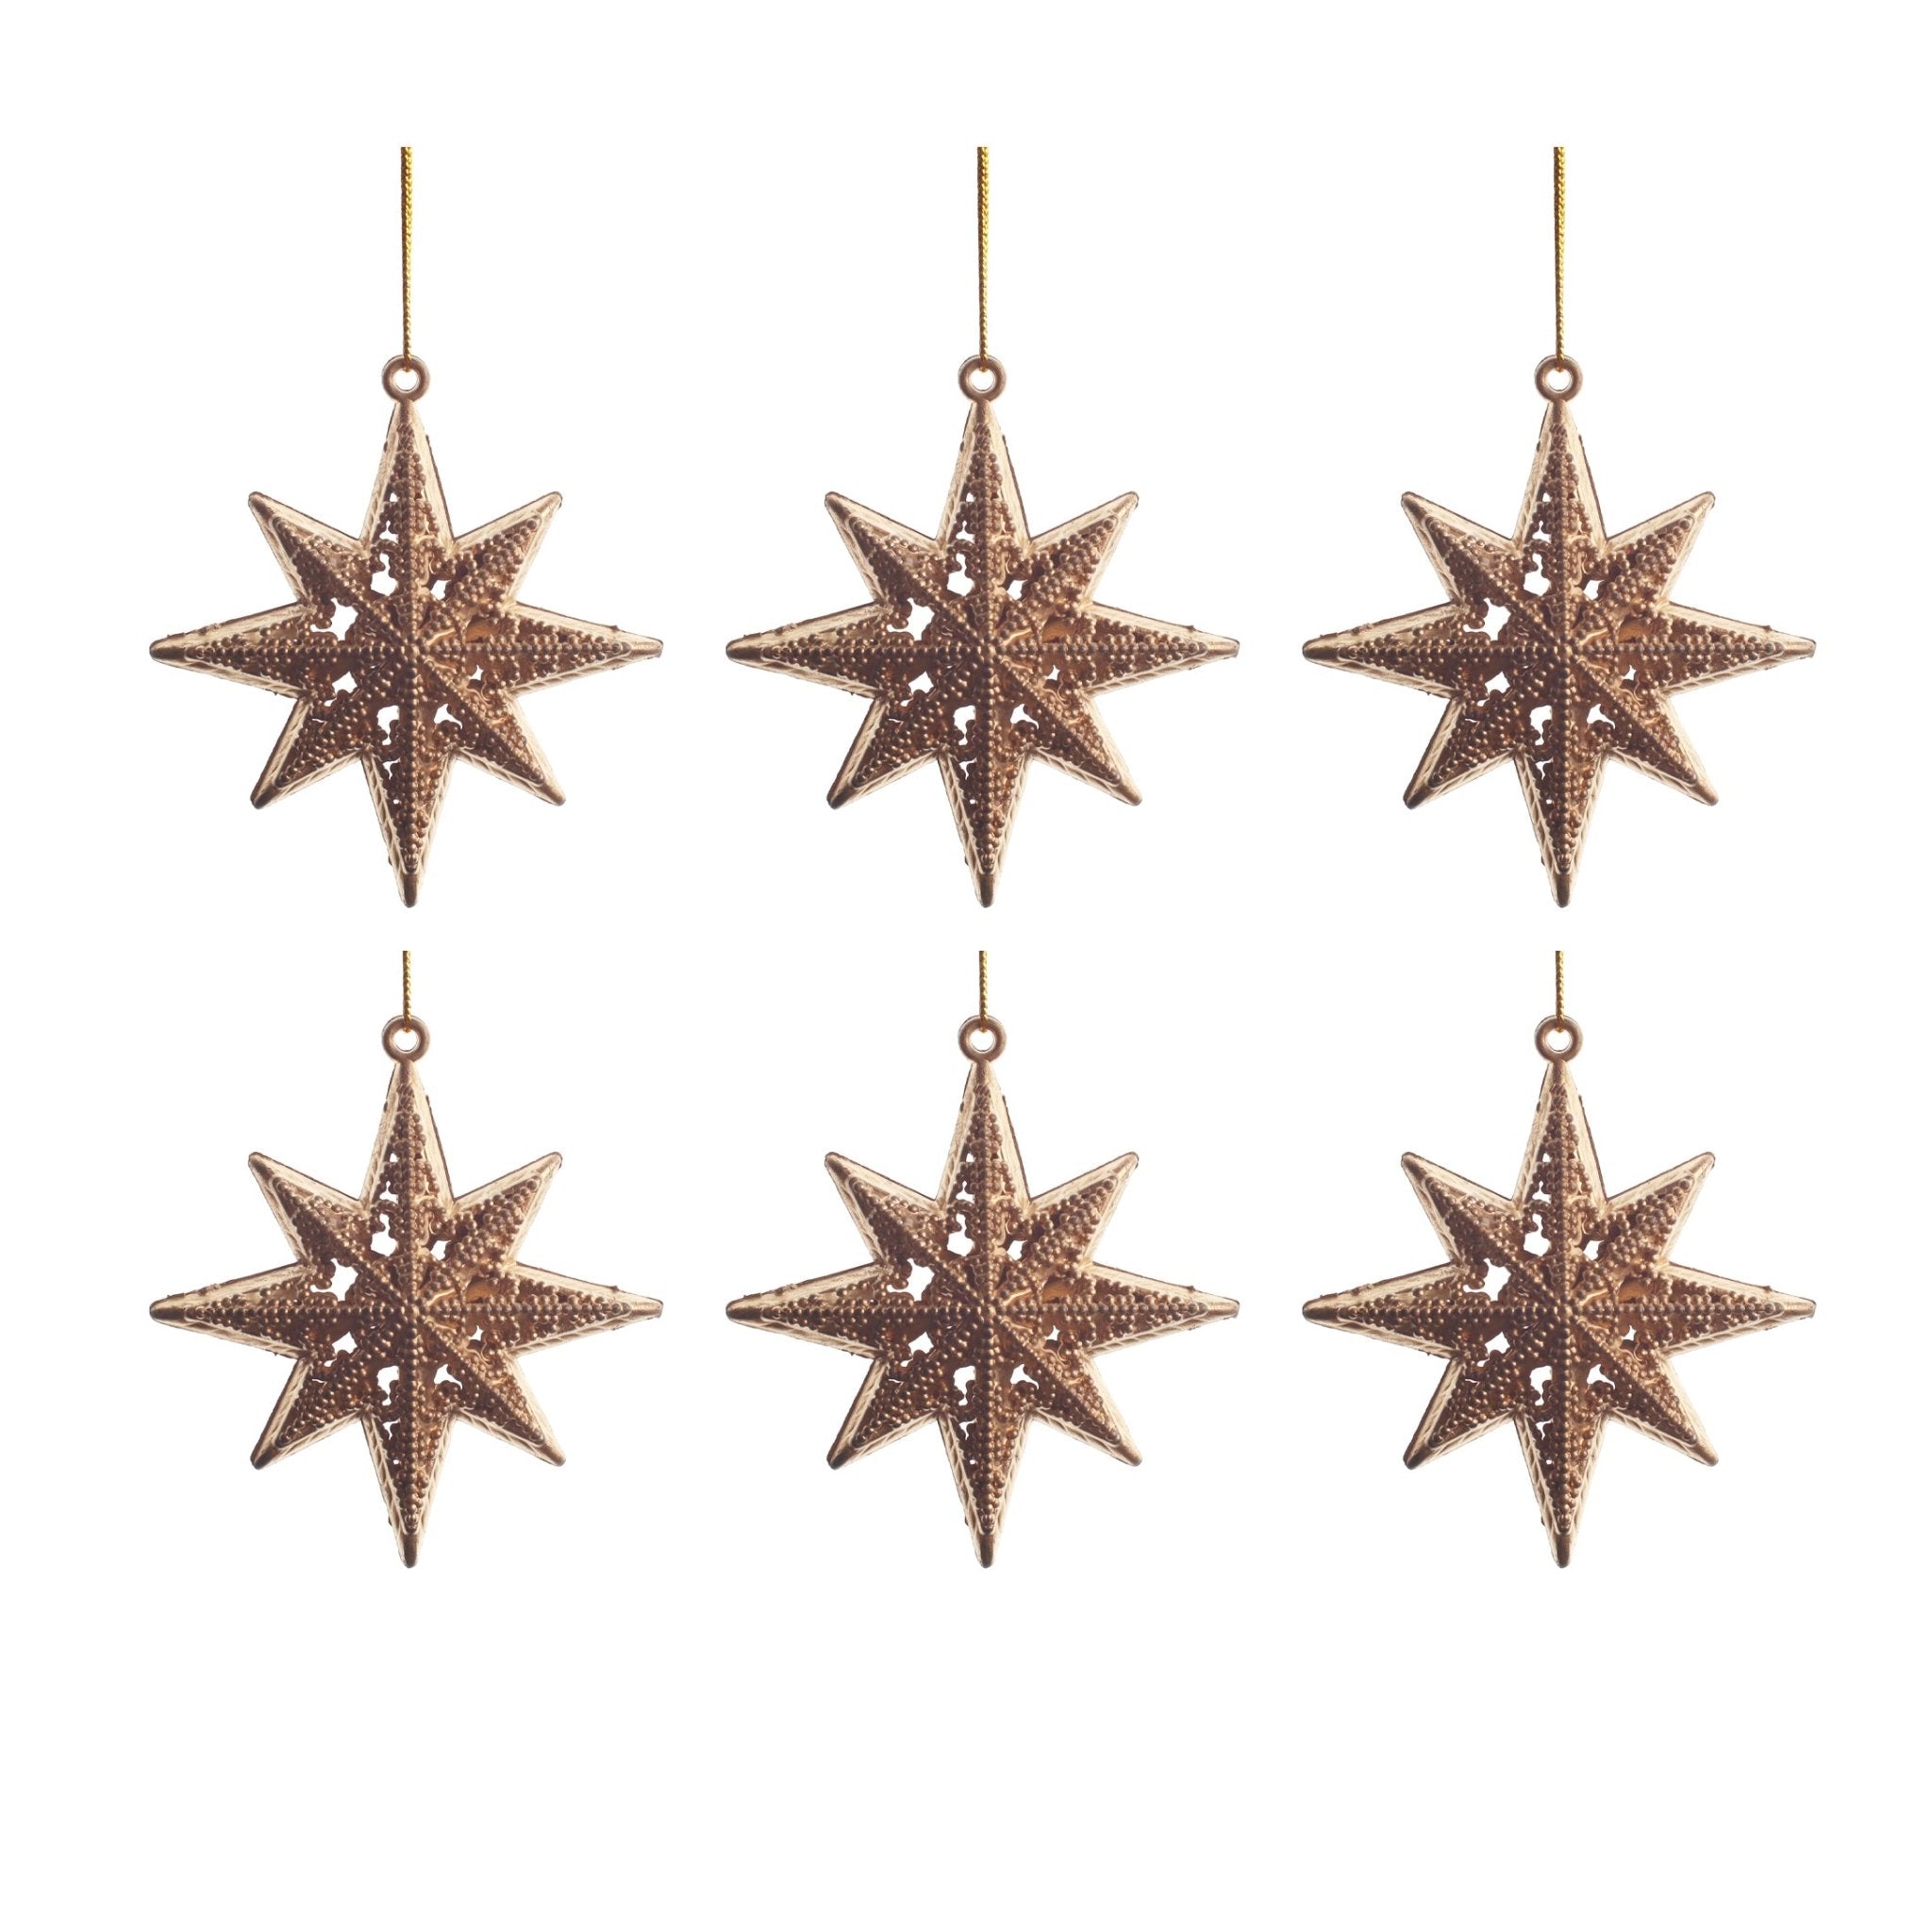 6pcs 8cm 8-pointed star ornament 03006 - MODA FLORA Santa's Workshop